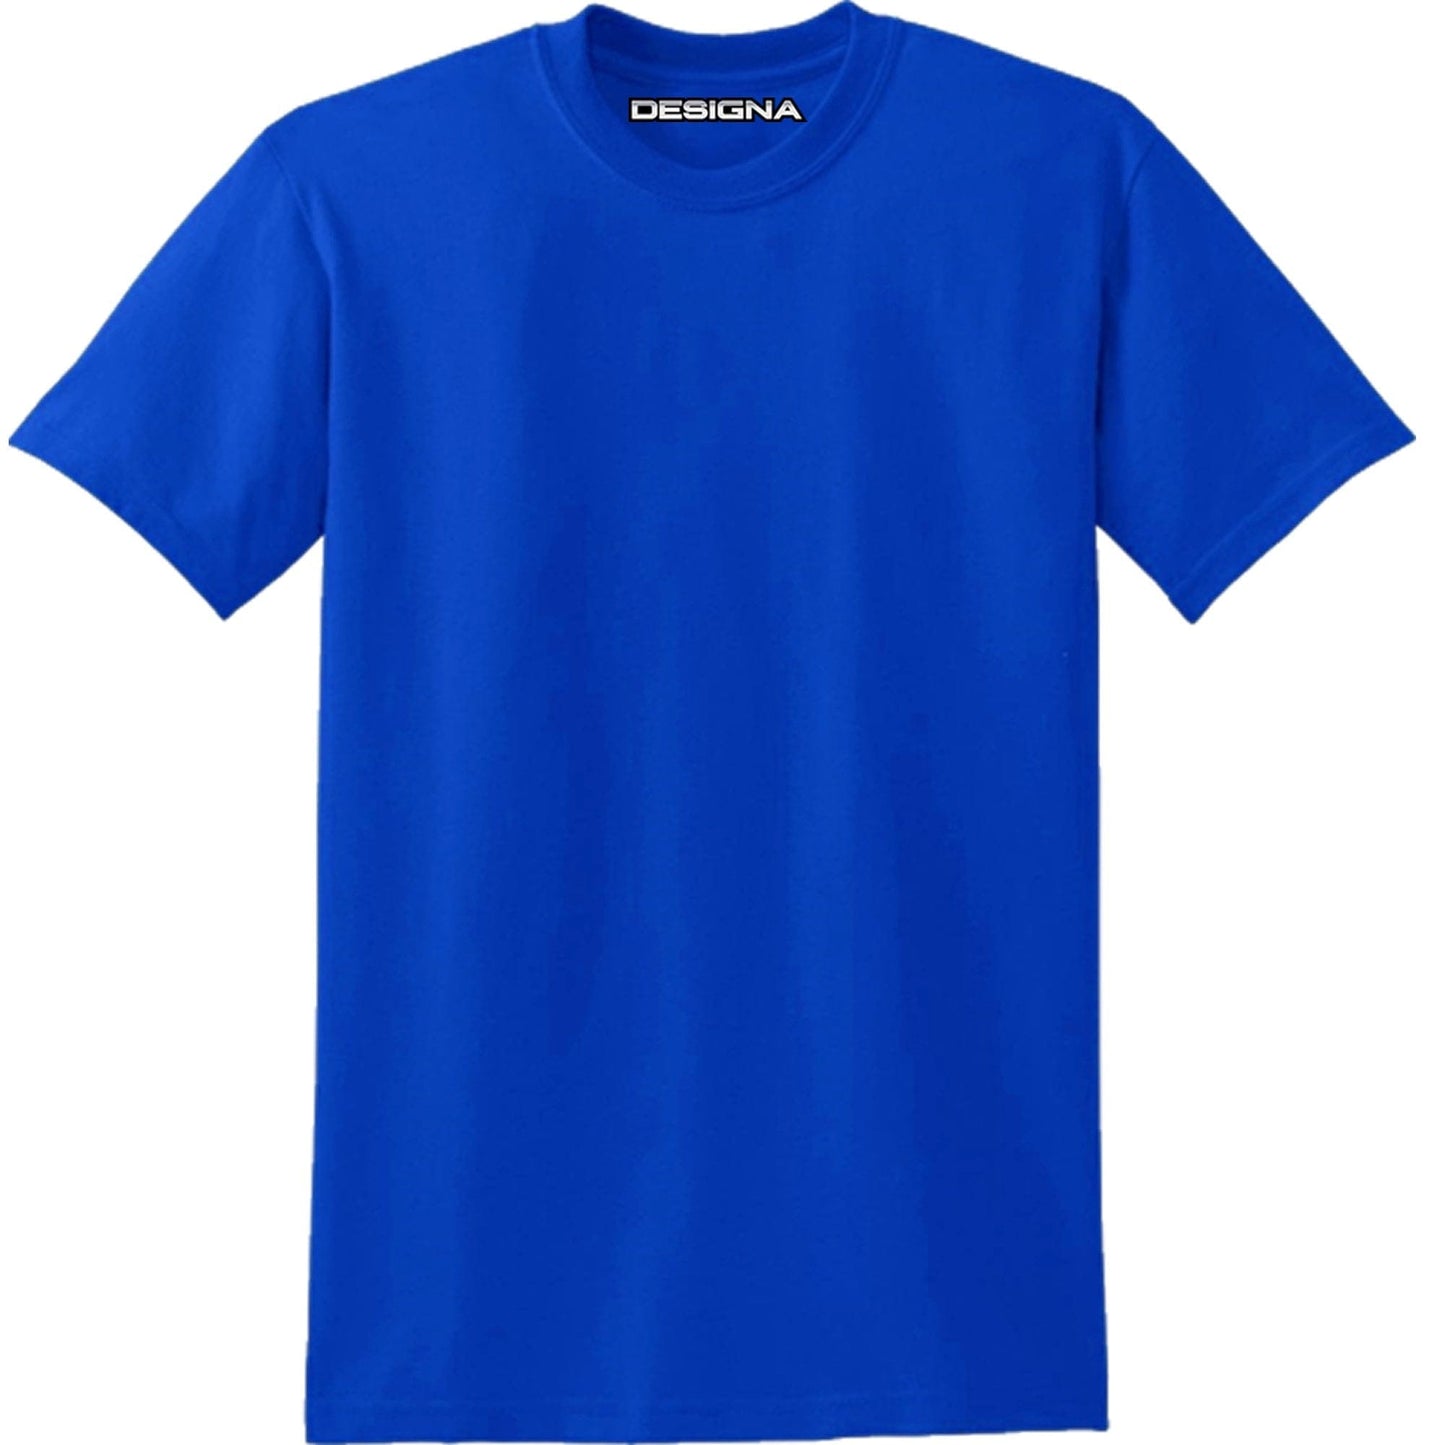 Designa - T Shirt - Heavyweight - Cotton - Royal Blue 3XL